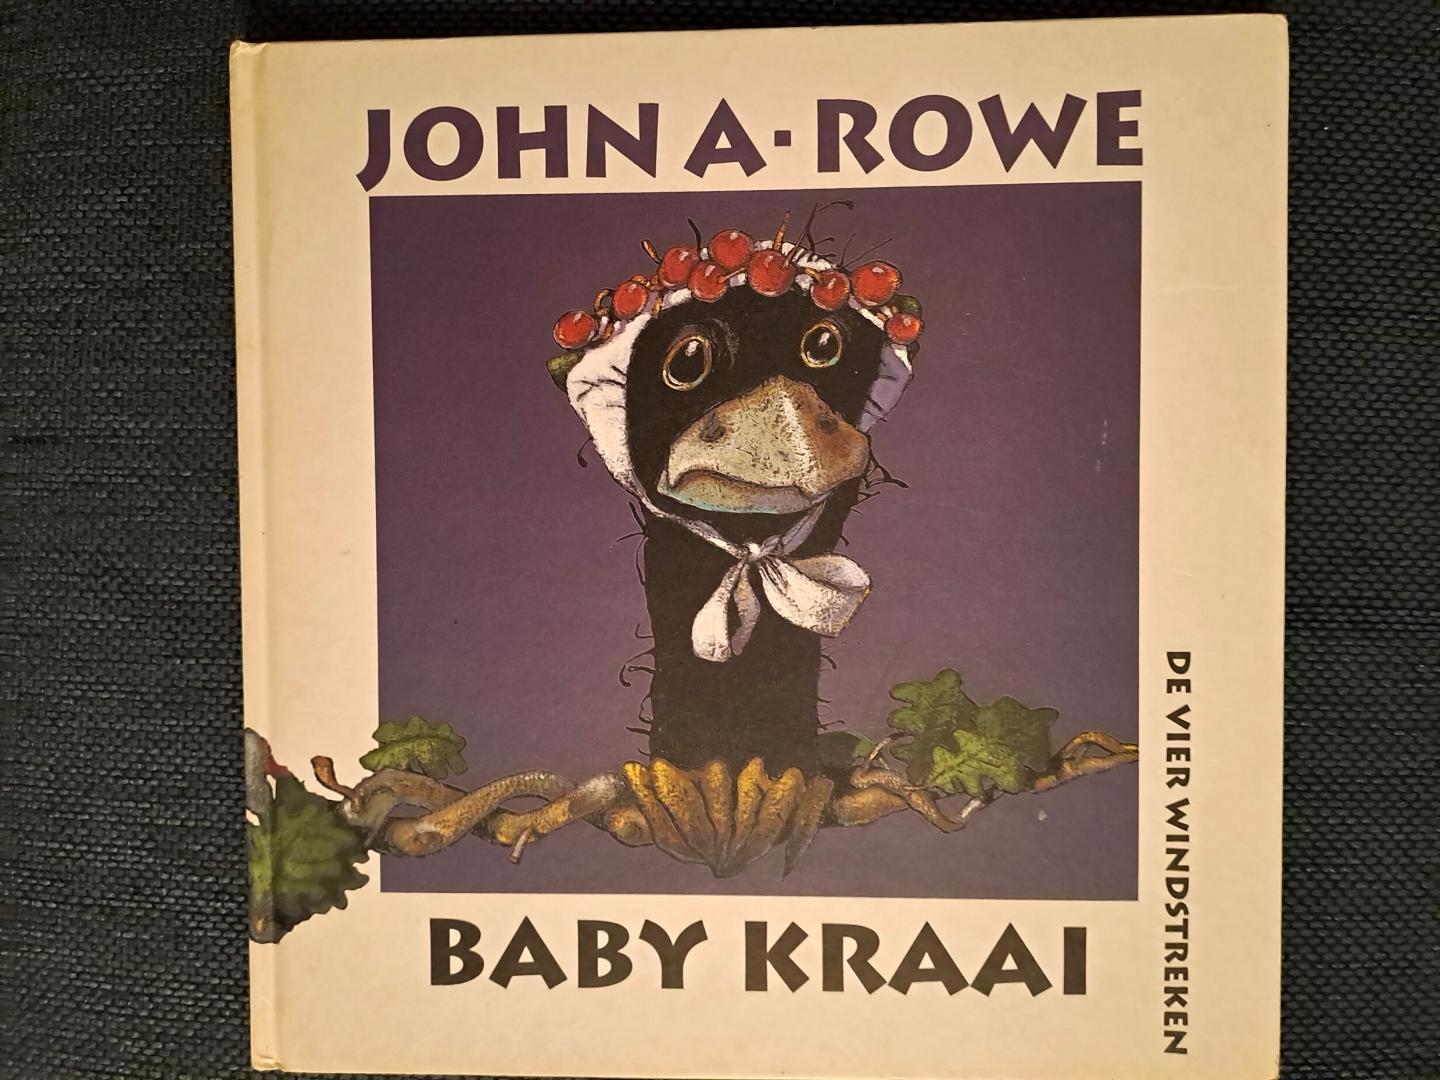 Rowe, John A. - Baby kraai